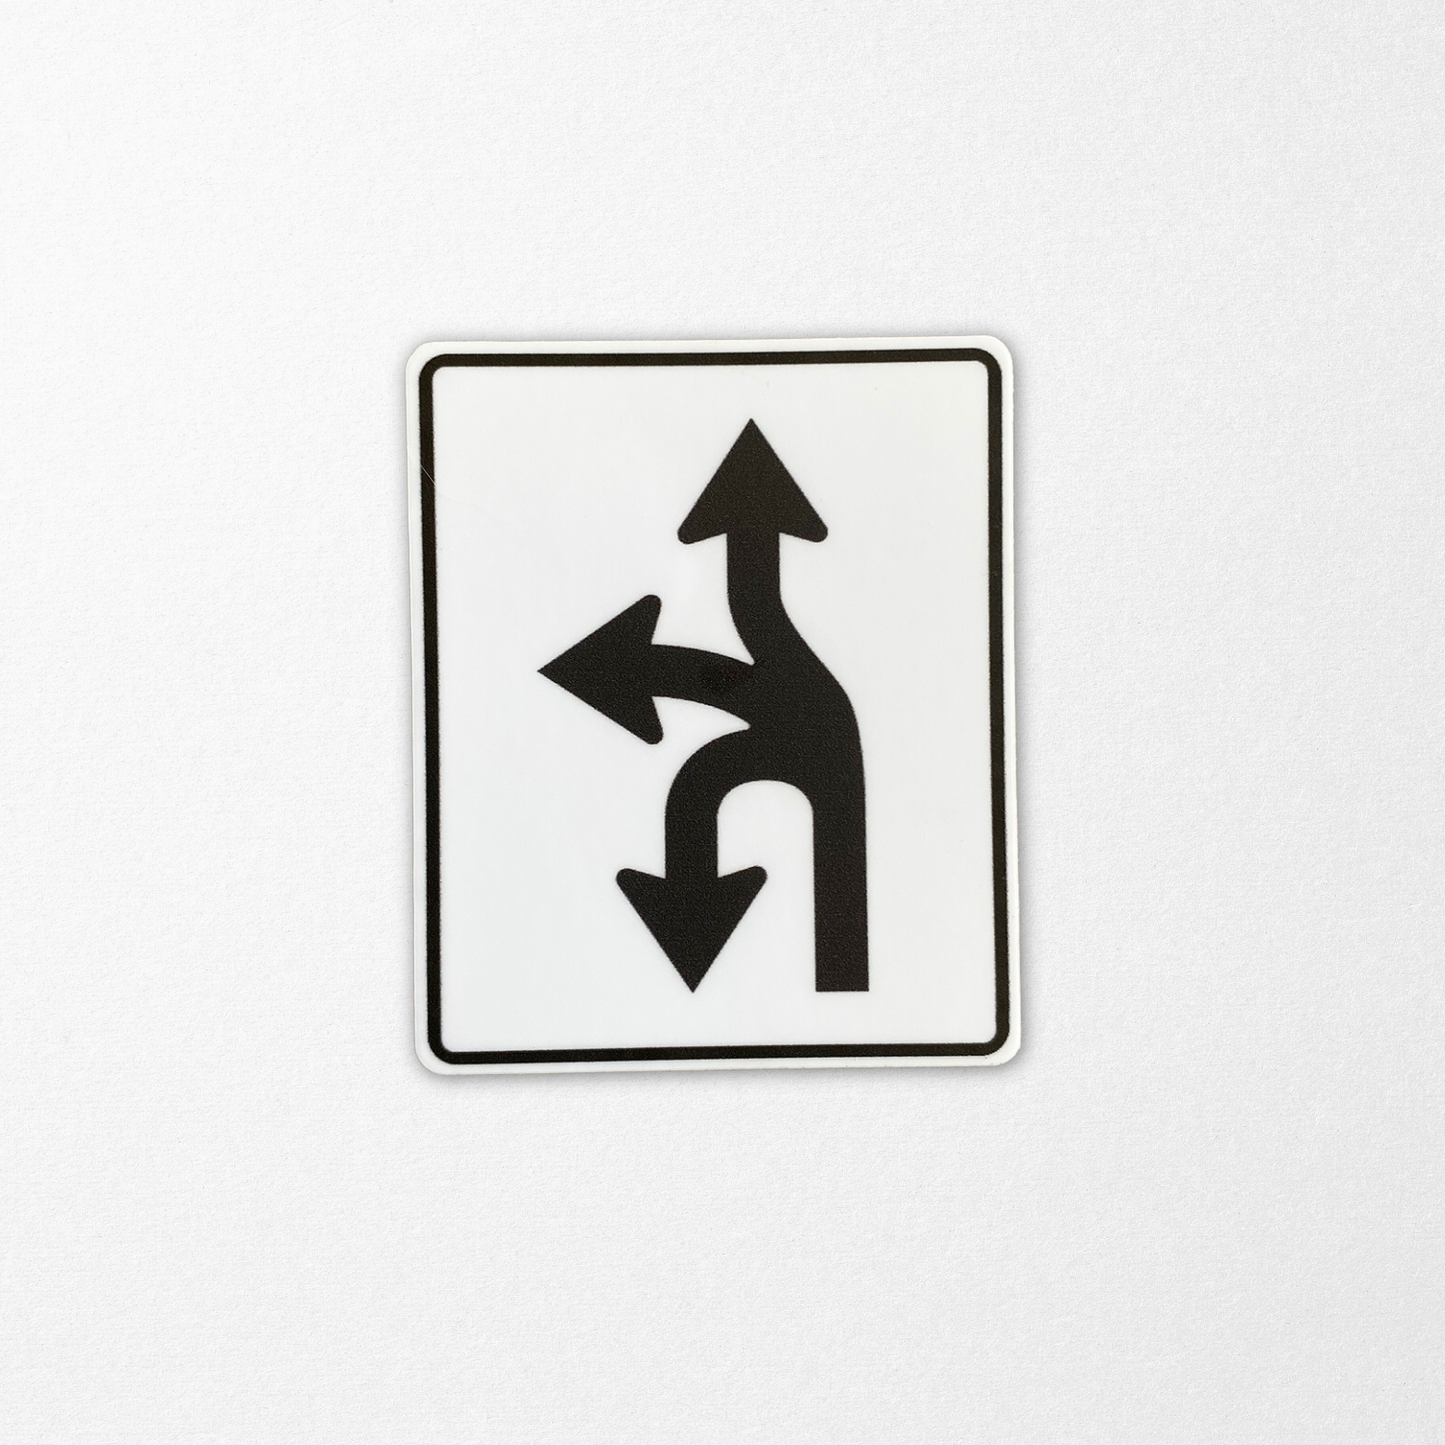 3 Way Arrow Sign